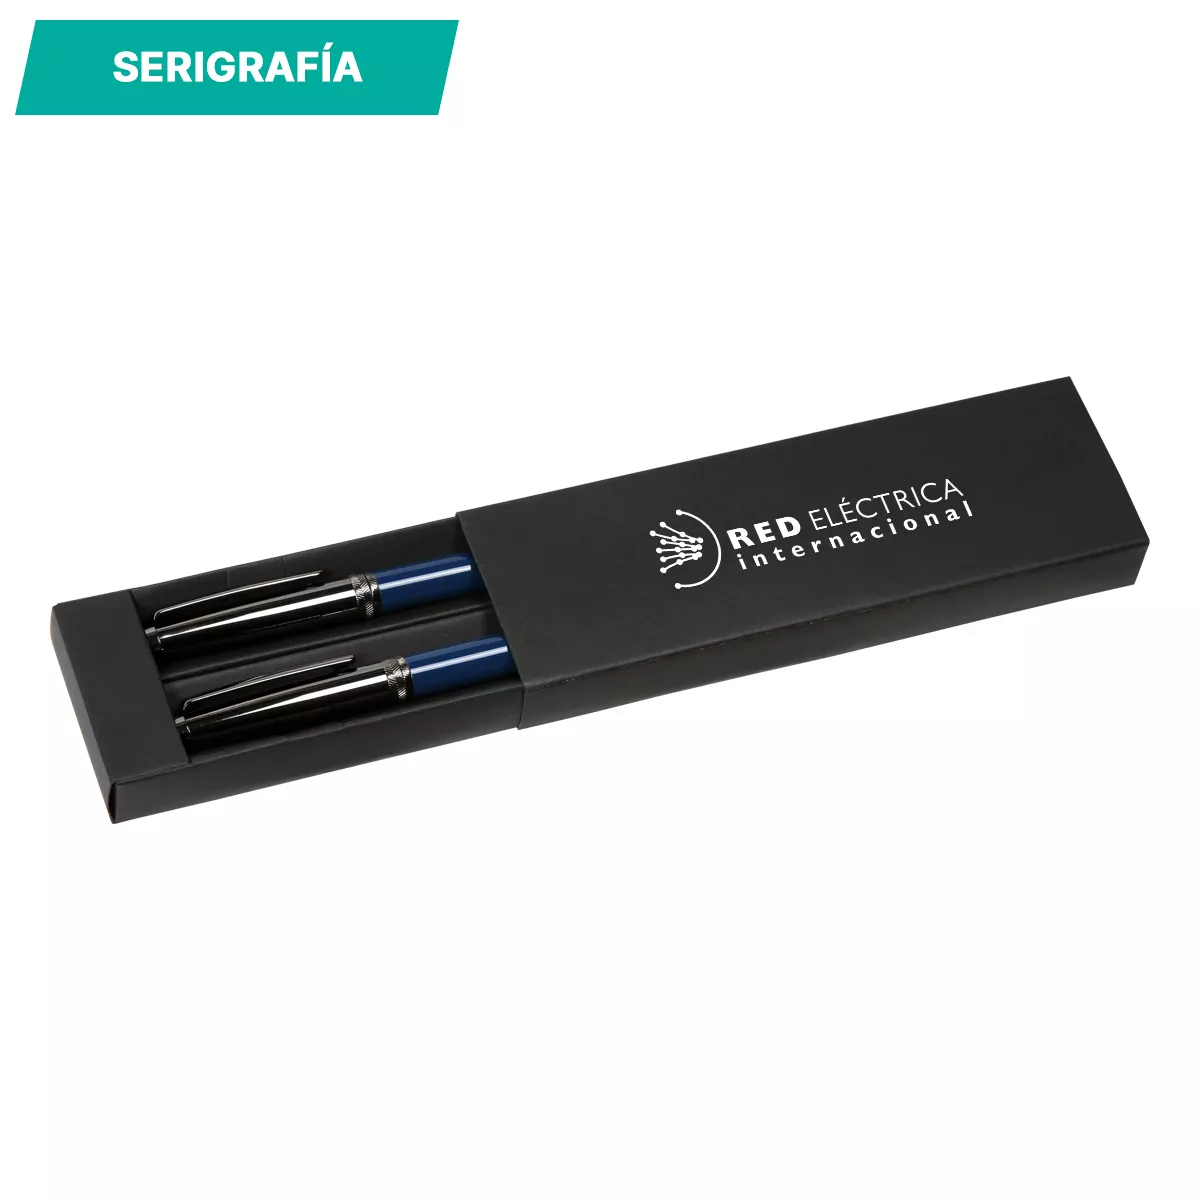 ST-023 Set de bolígrafos Aranjuez. AZUL MARINO